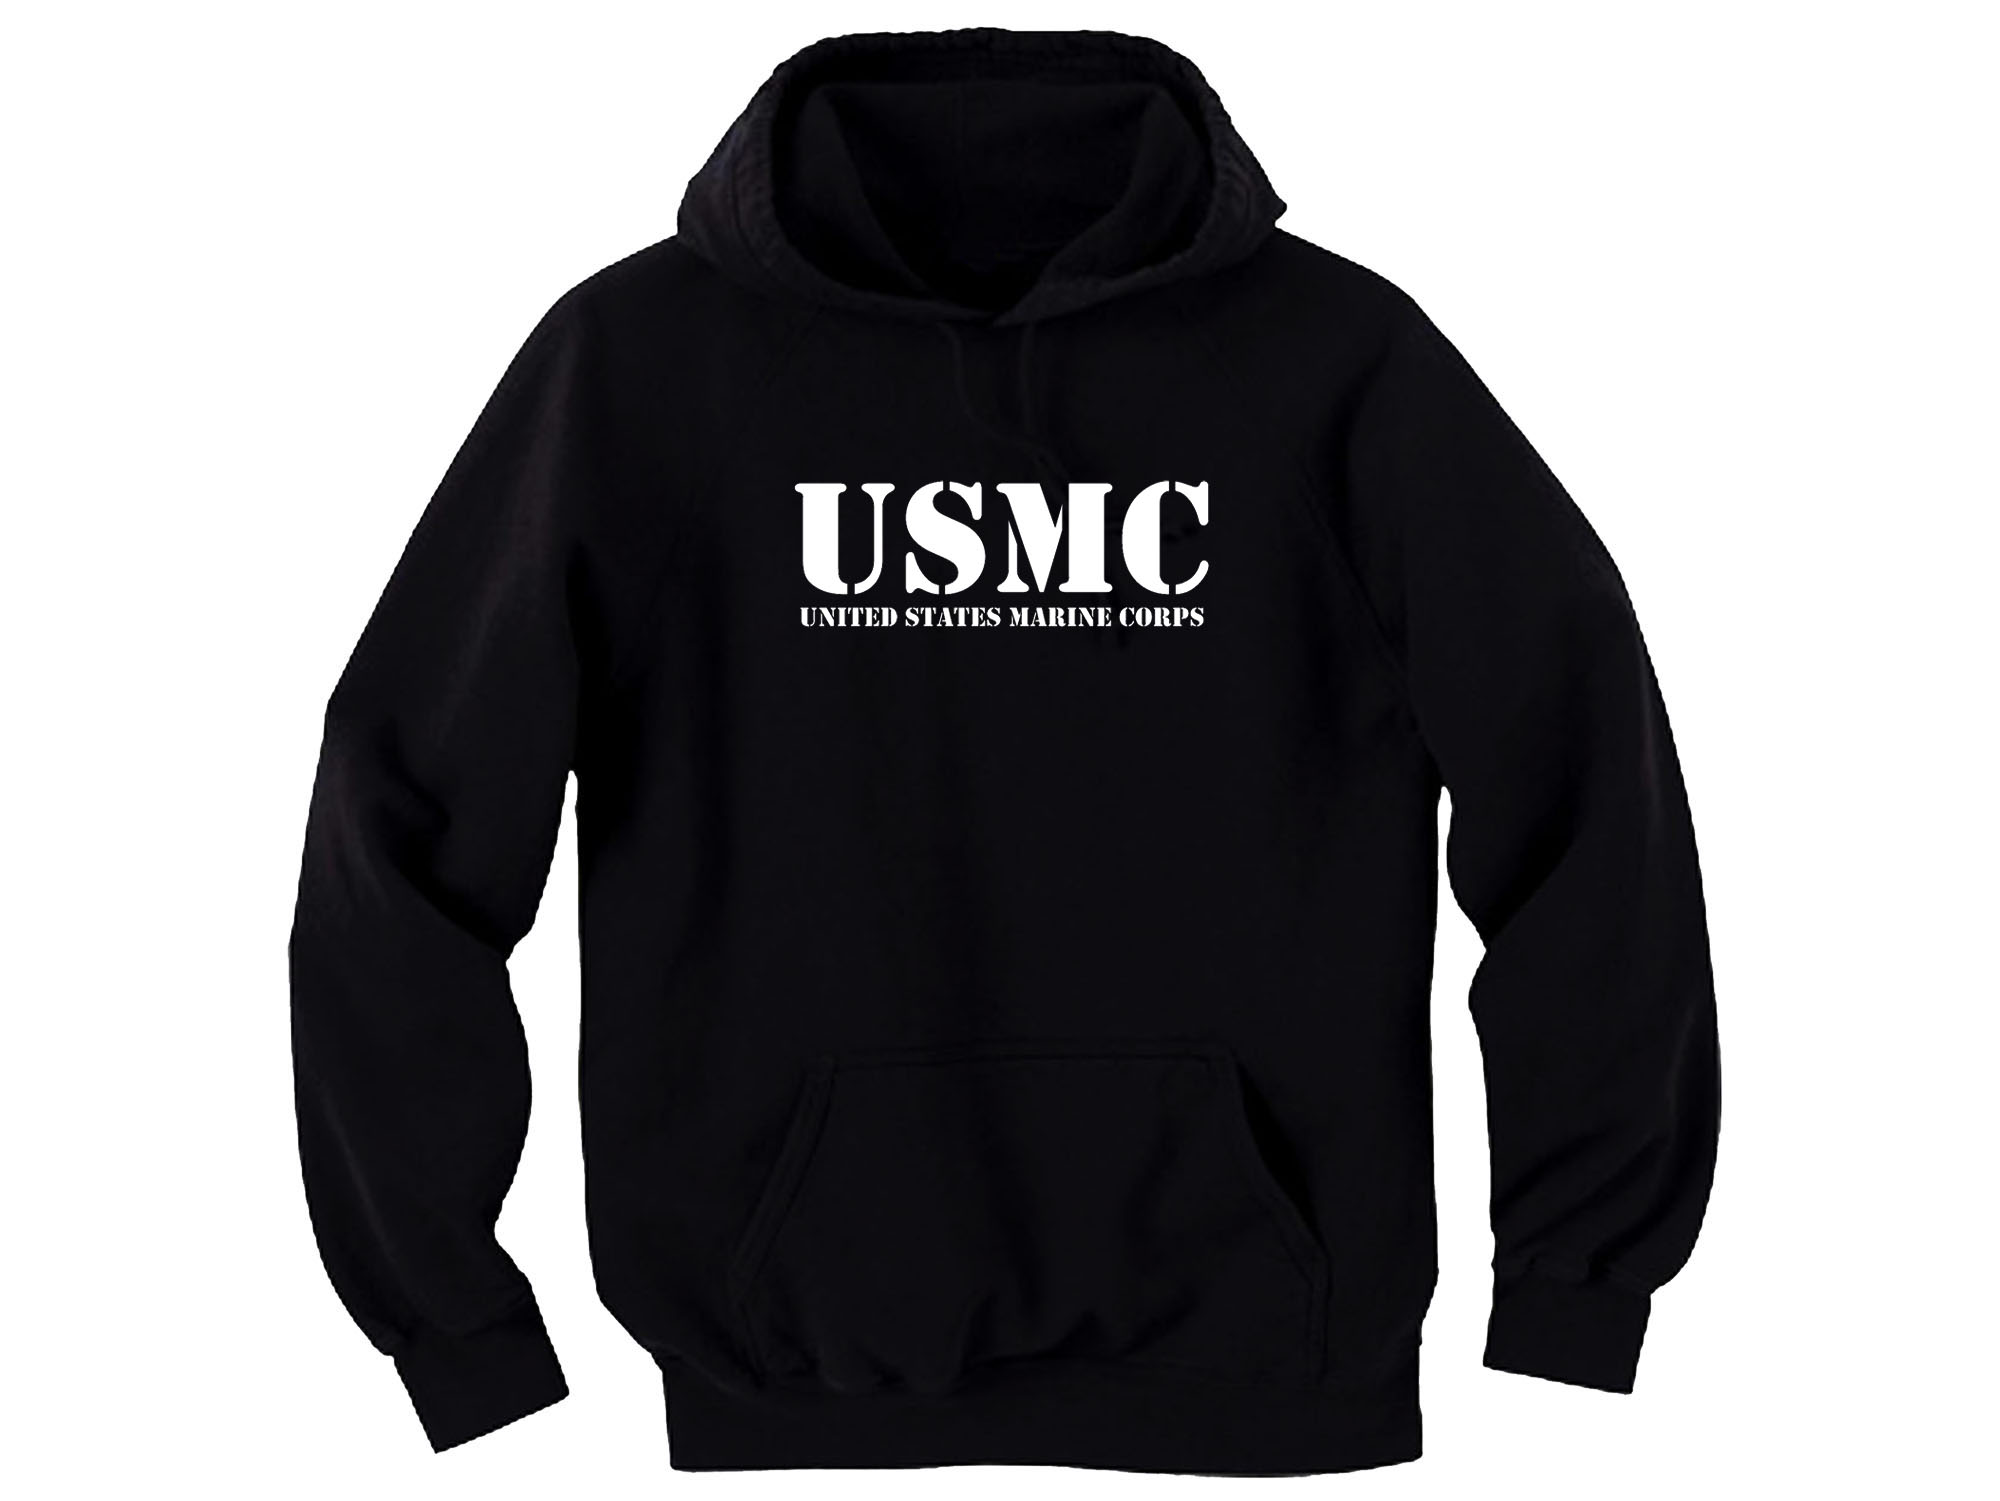 US army marine corps USMC military sweater hoodie